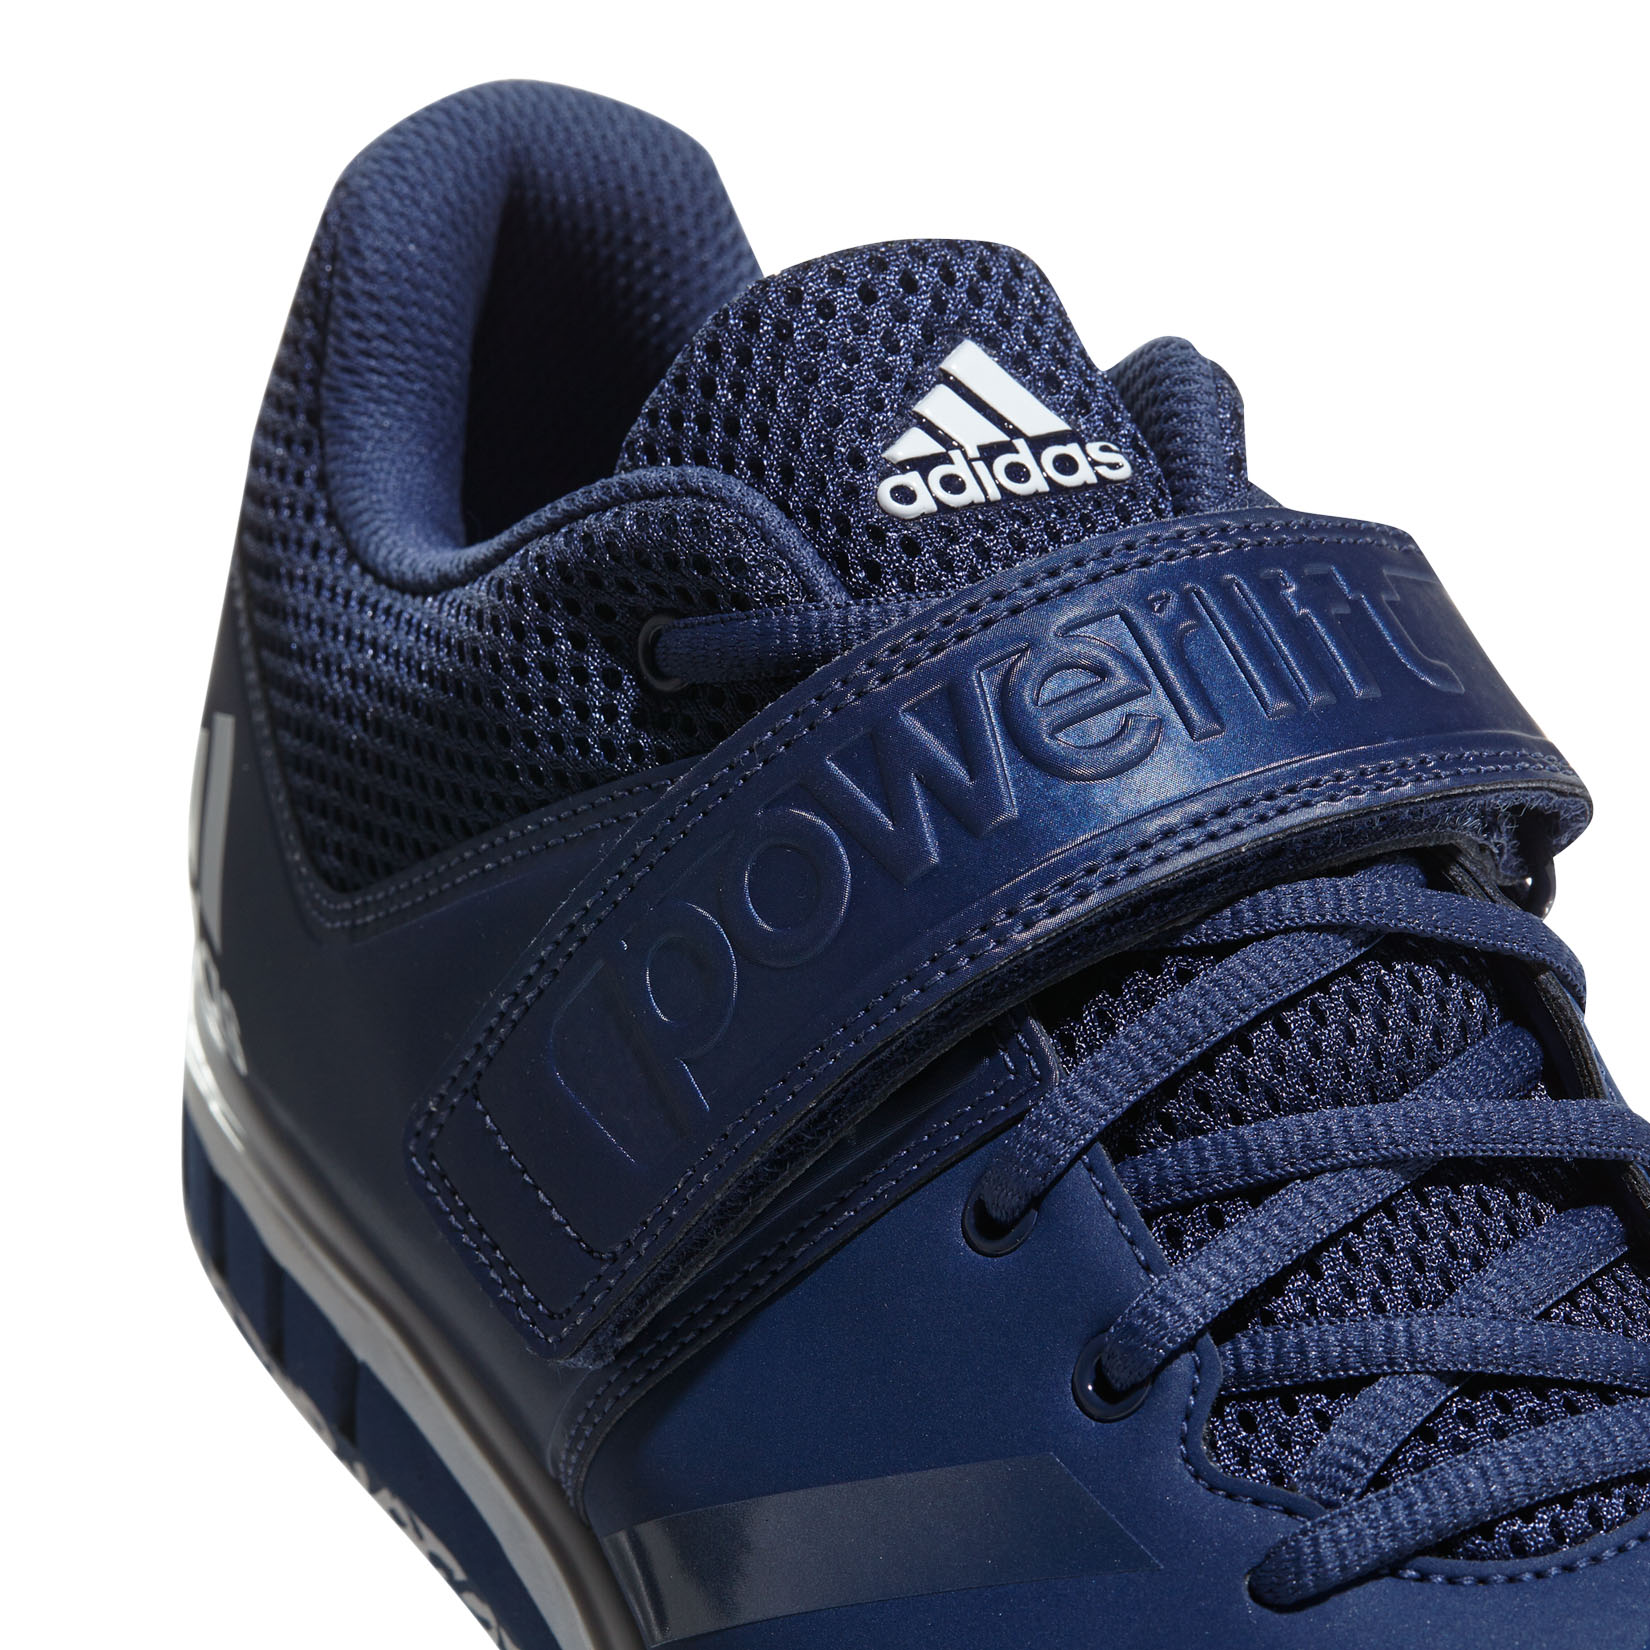 adidas powerlift 3.1 blue